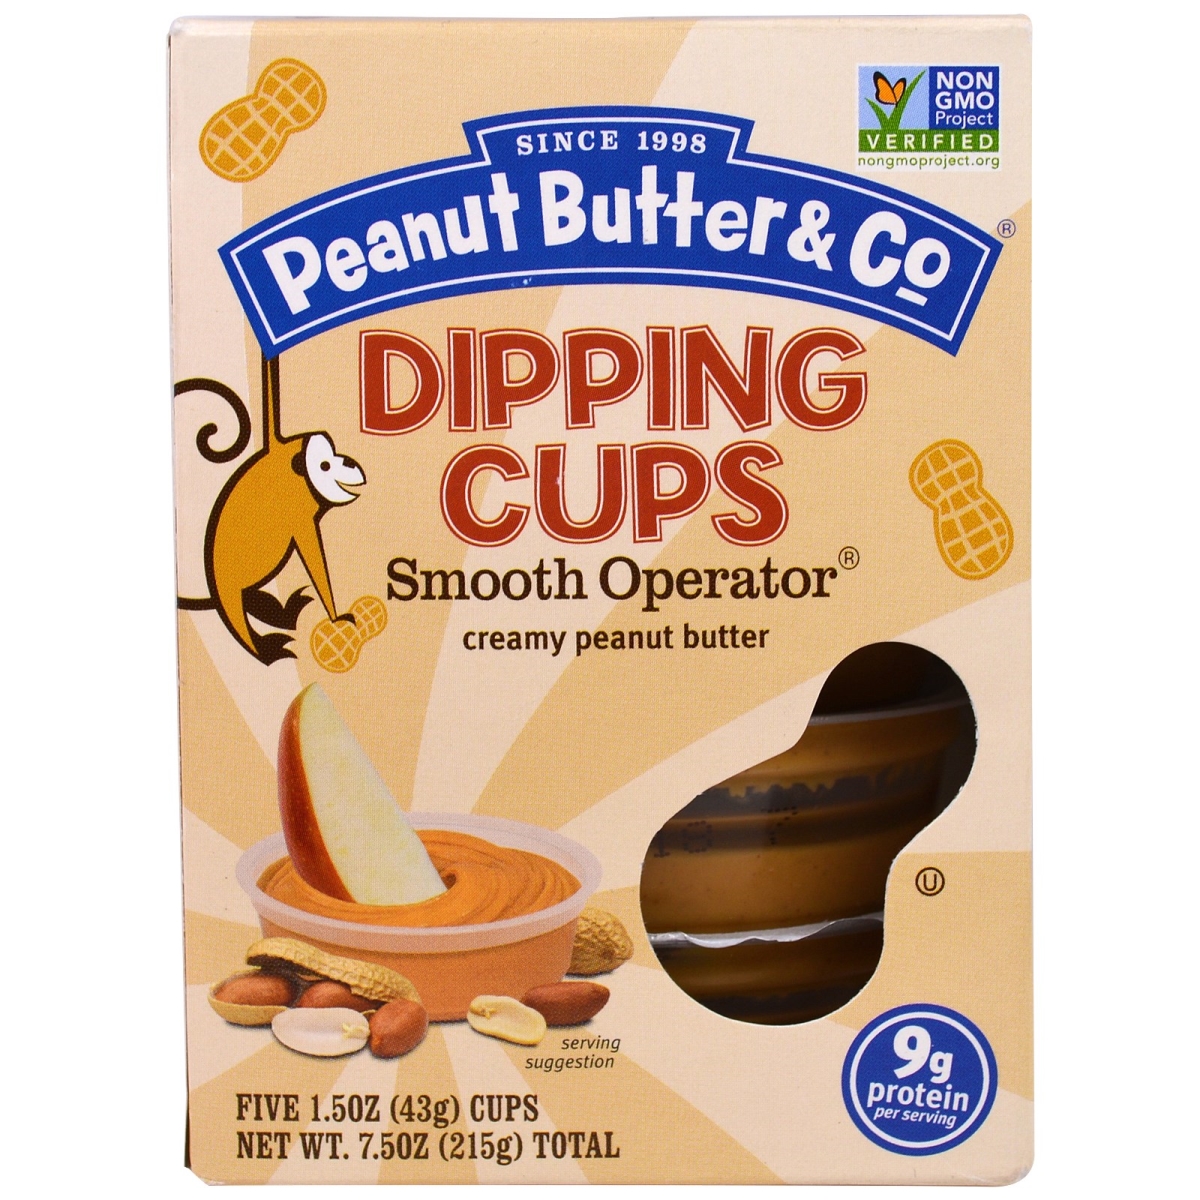 Peanut Butter & Co Creamy Peanut Butter Food Product Image